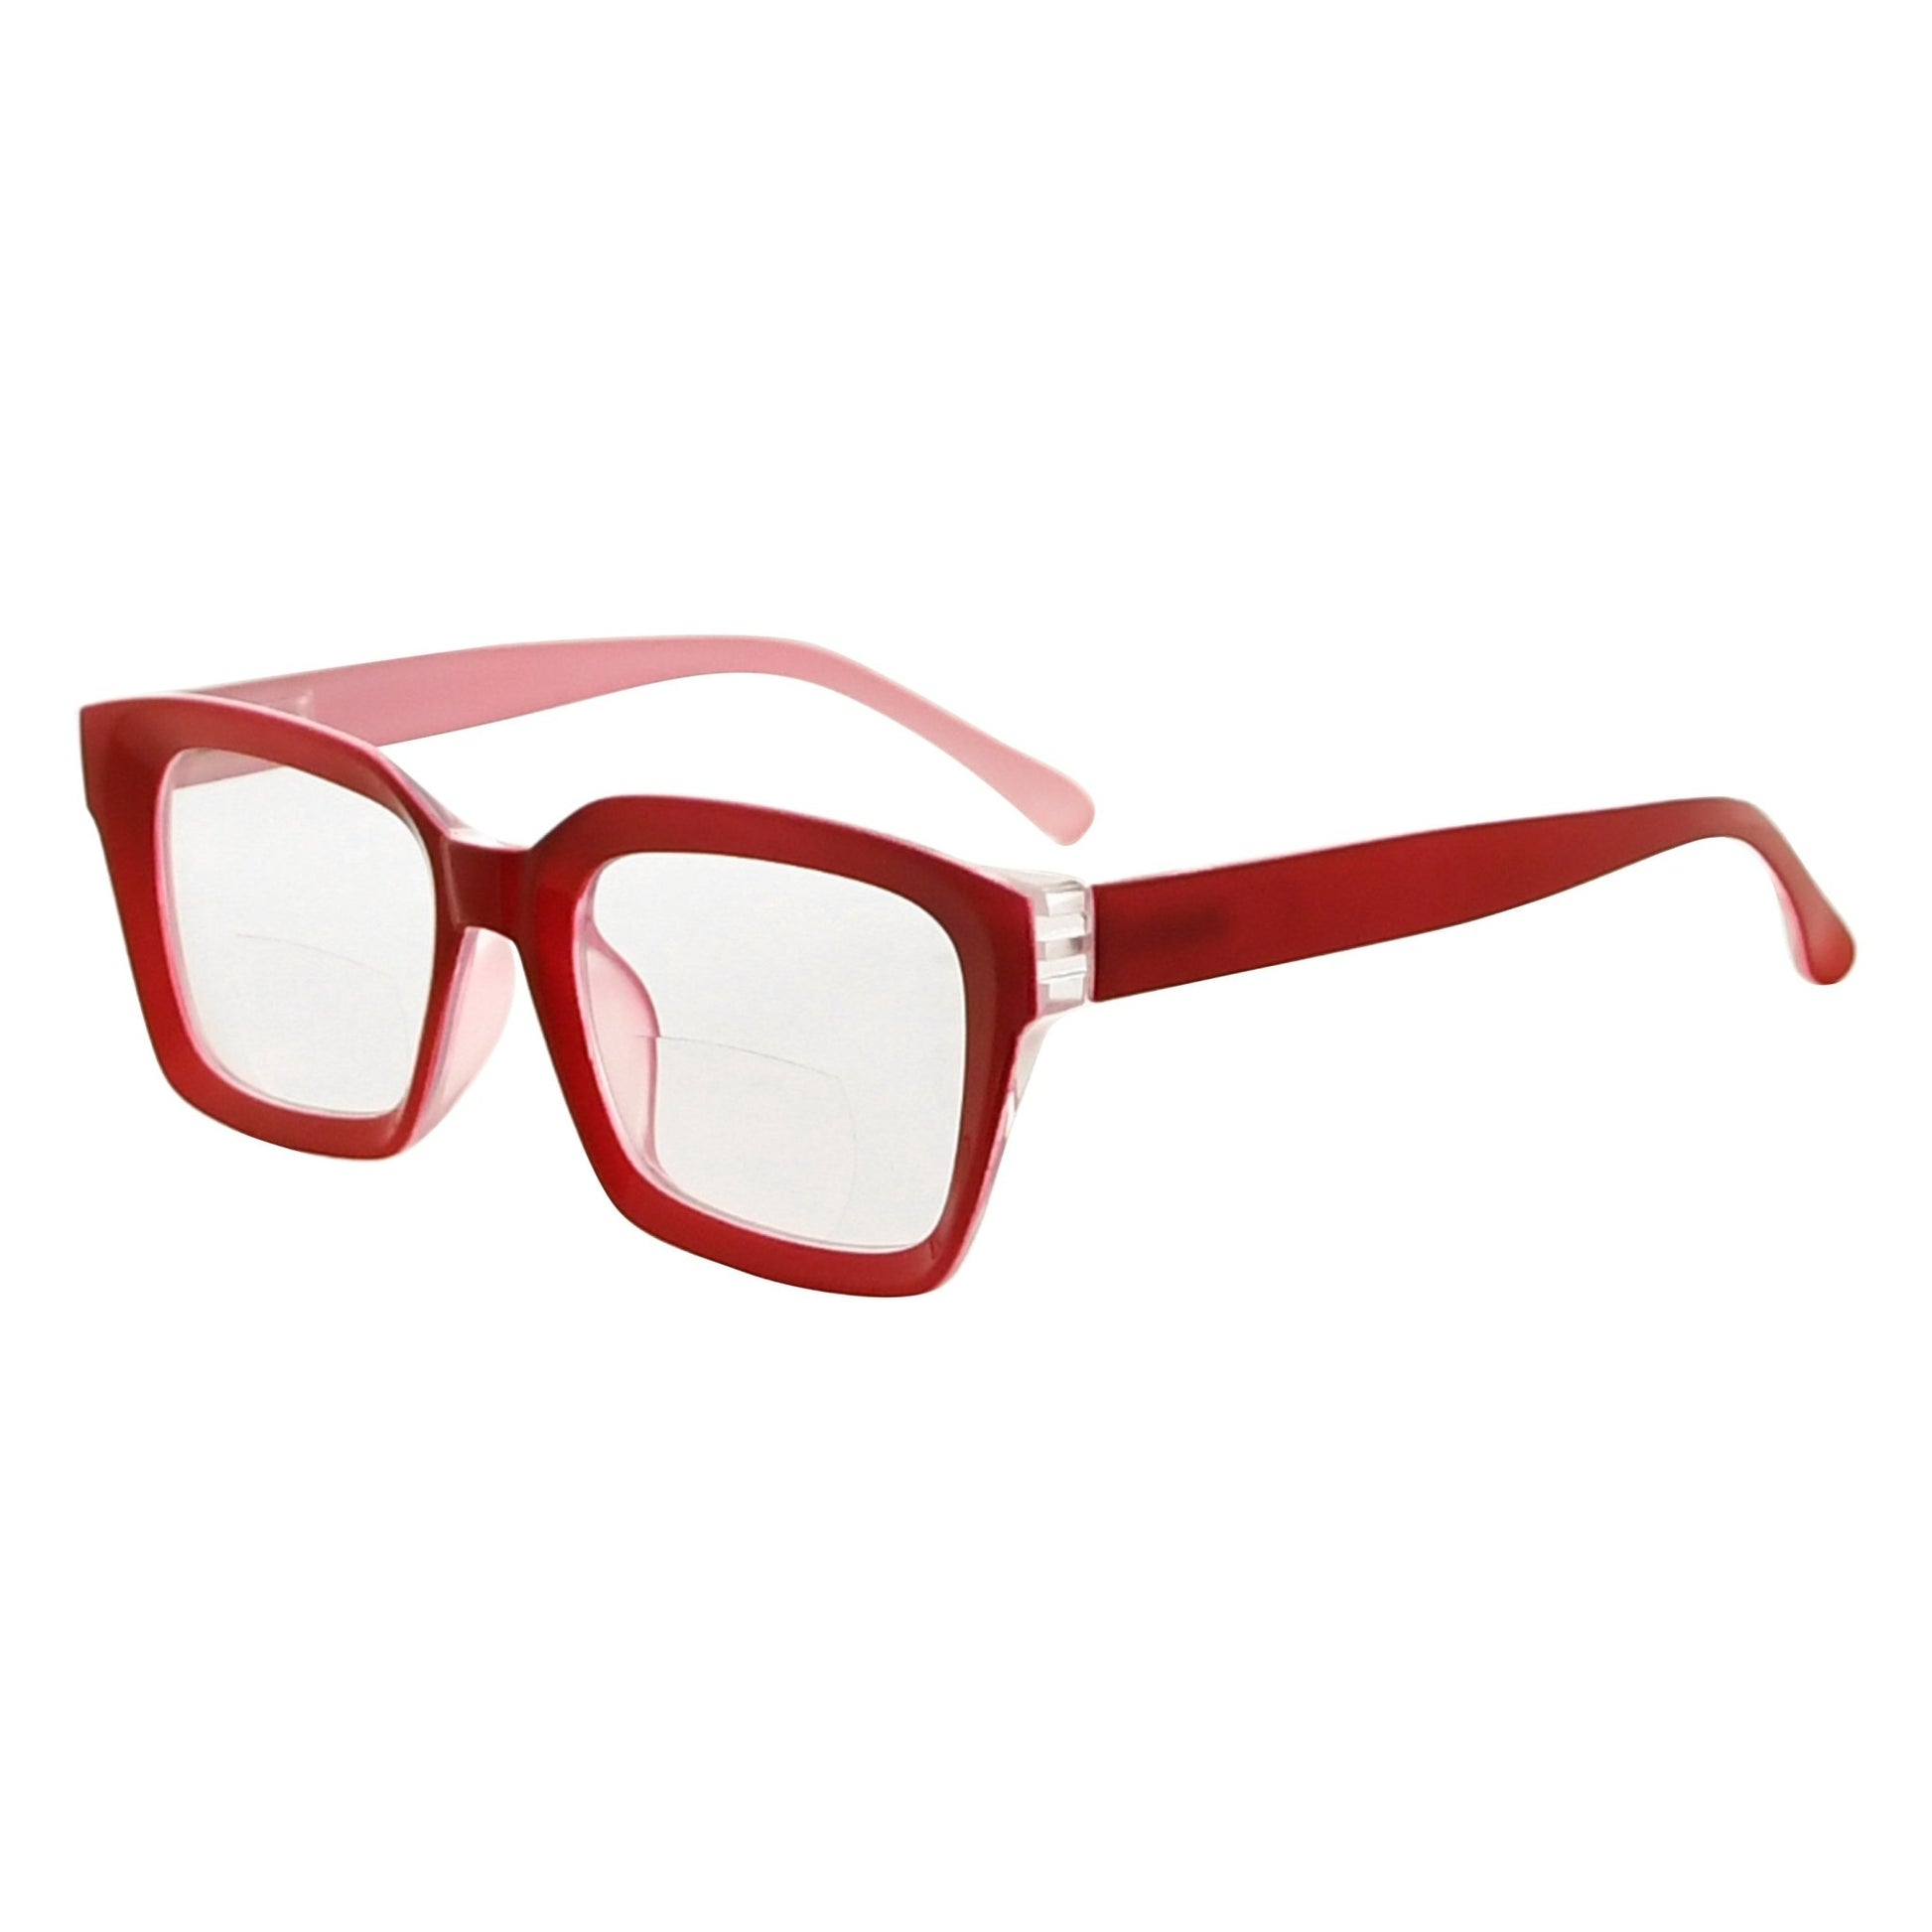 Oversized Square Bifocal Reading Glasses for Women BR9106